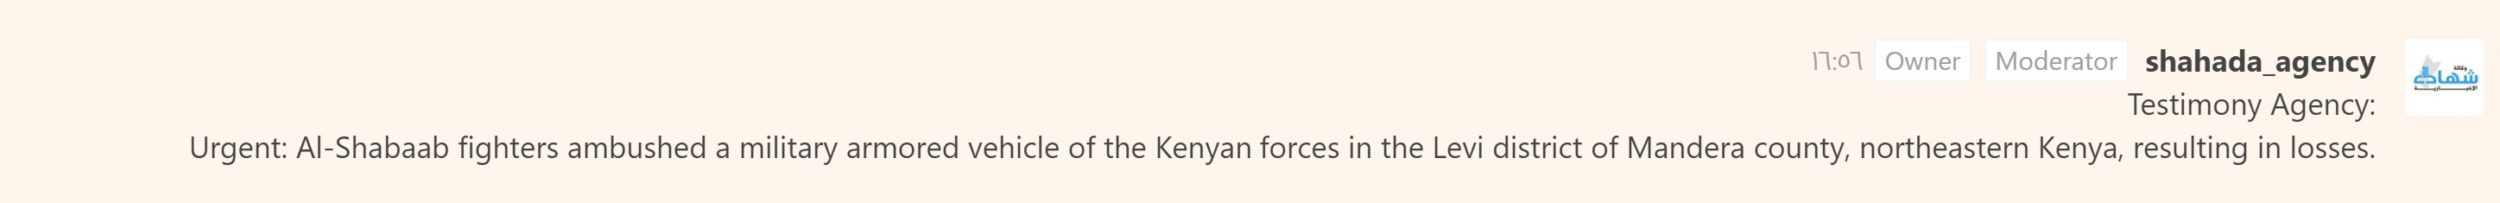 (Claim) al-Shabaab: Mujahideen Ambushed a Kenyan Army Armored Vehicle in Levi District, Mandera County, Northeastern Kenya - 19 March 2022